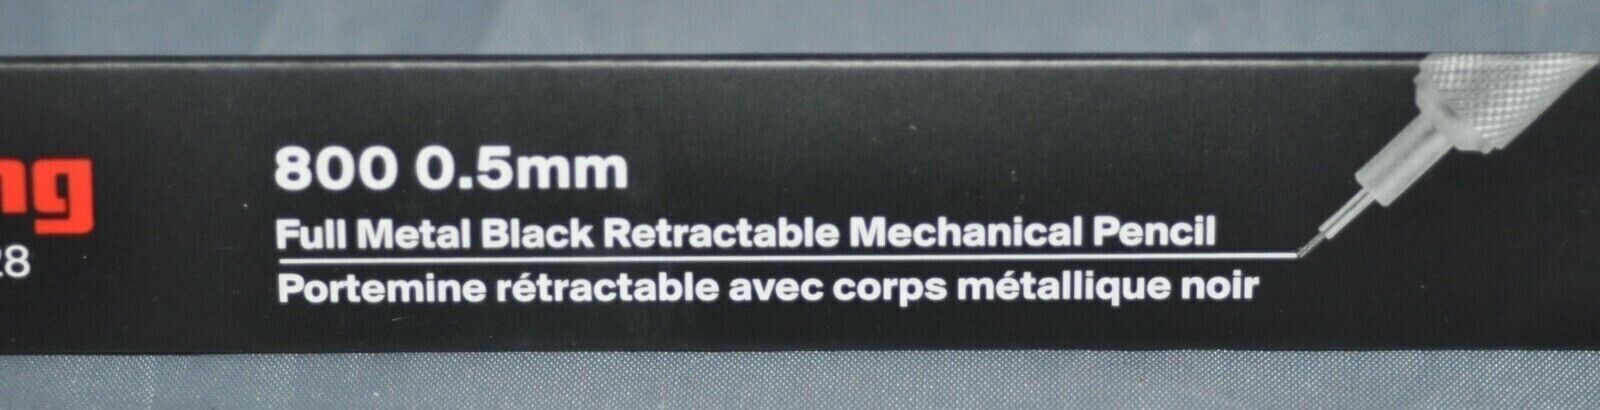 Rotring 800 0.5mm Full Metal Black Retractable Mechanical Pencil 1904447